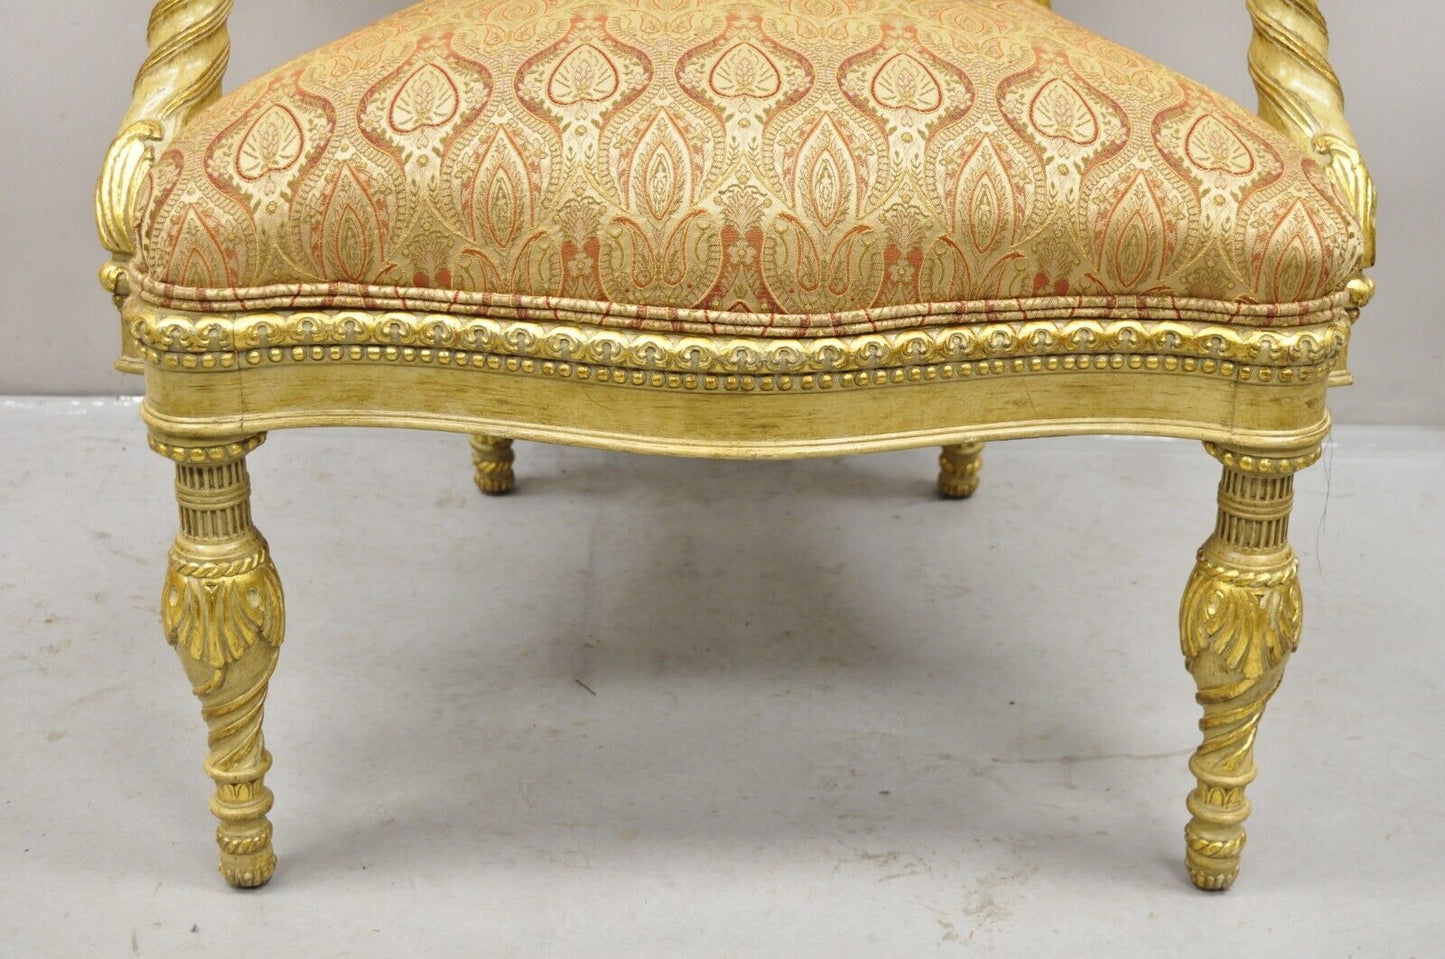 Oscar de la Renta Home Century Furniture Italian Neoclassical Style Armchair